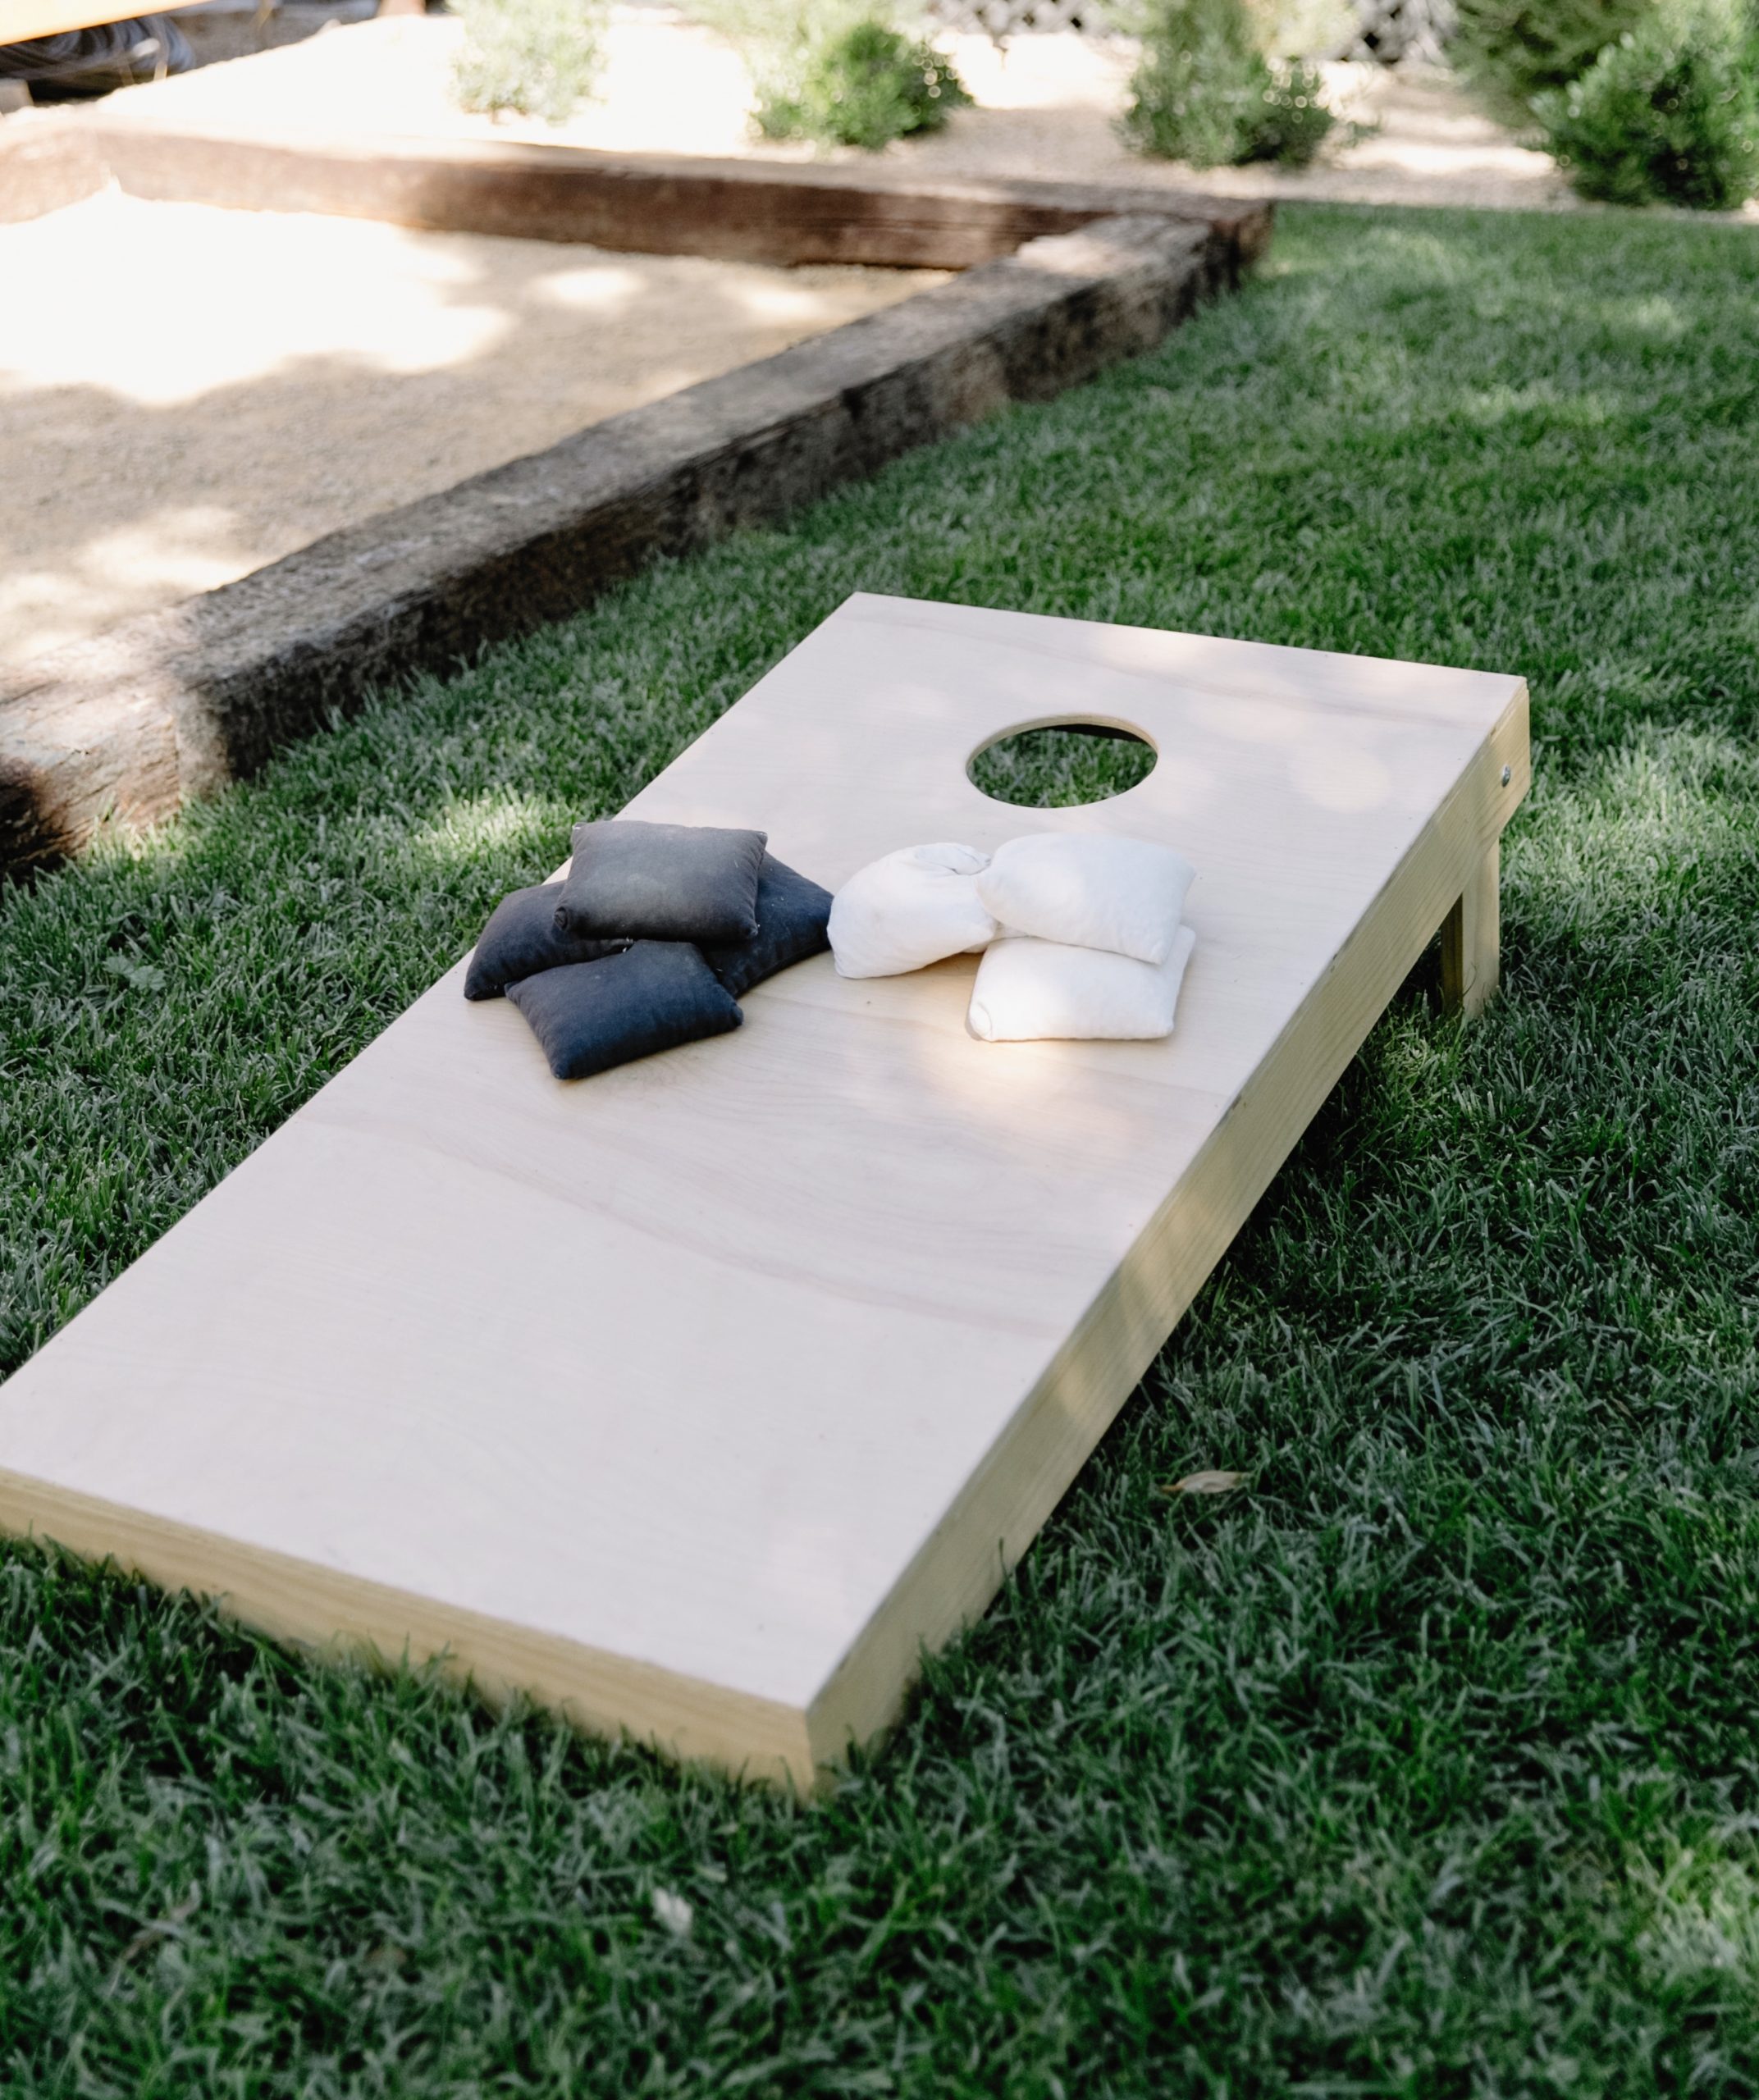 Summer garden idea with a lawn game setup (corn hole)